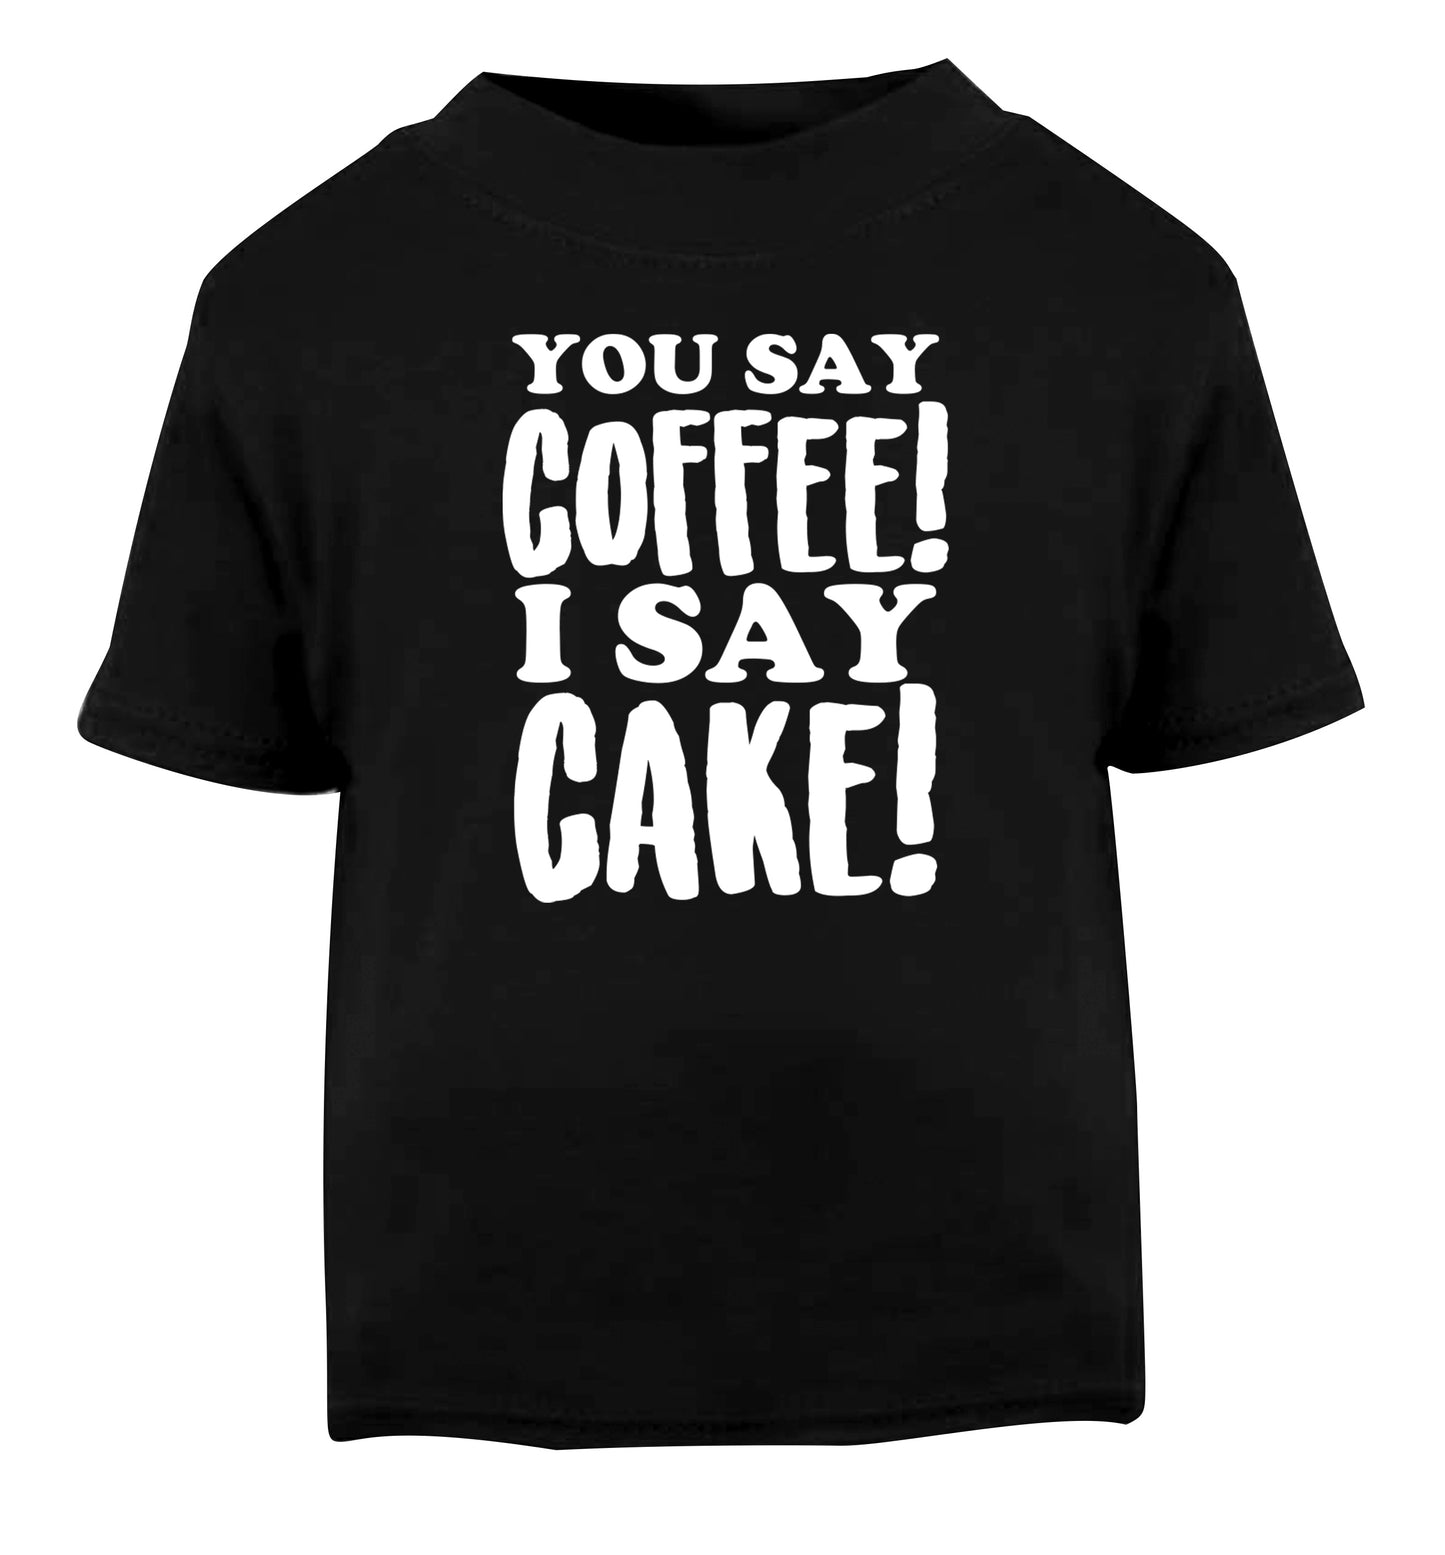 You say coffee I say cake! Black Baby Toddler Tshirt 2 years